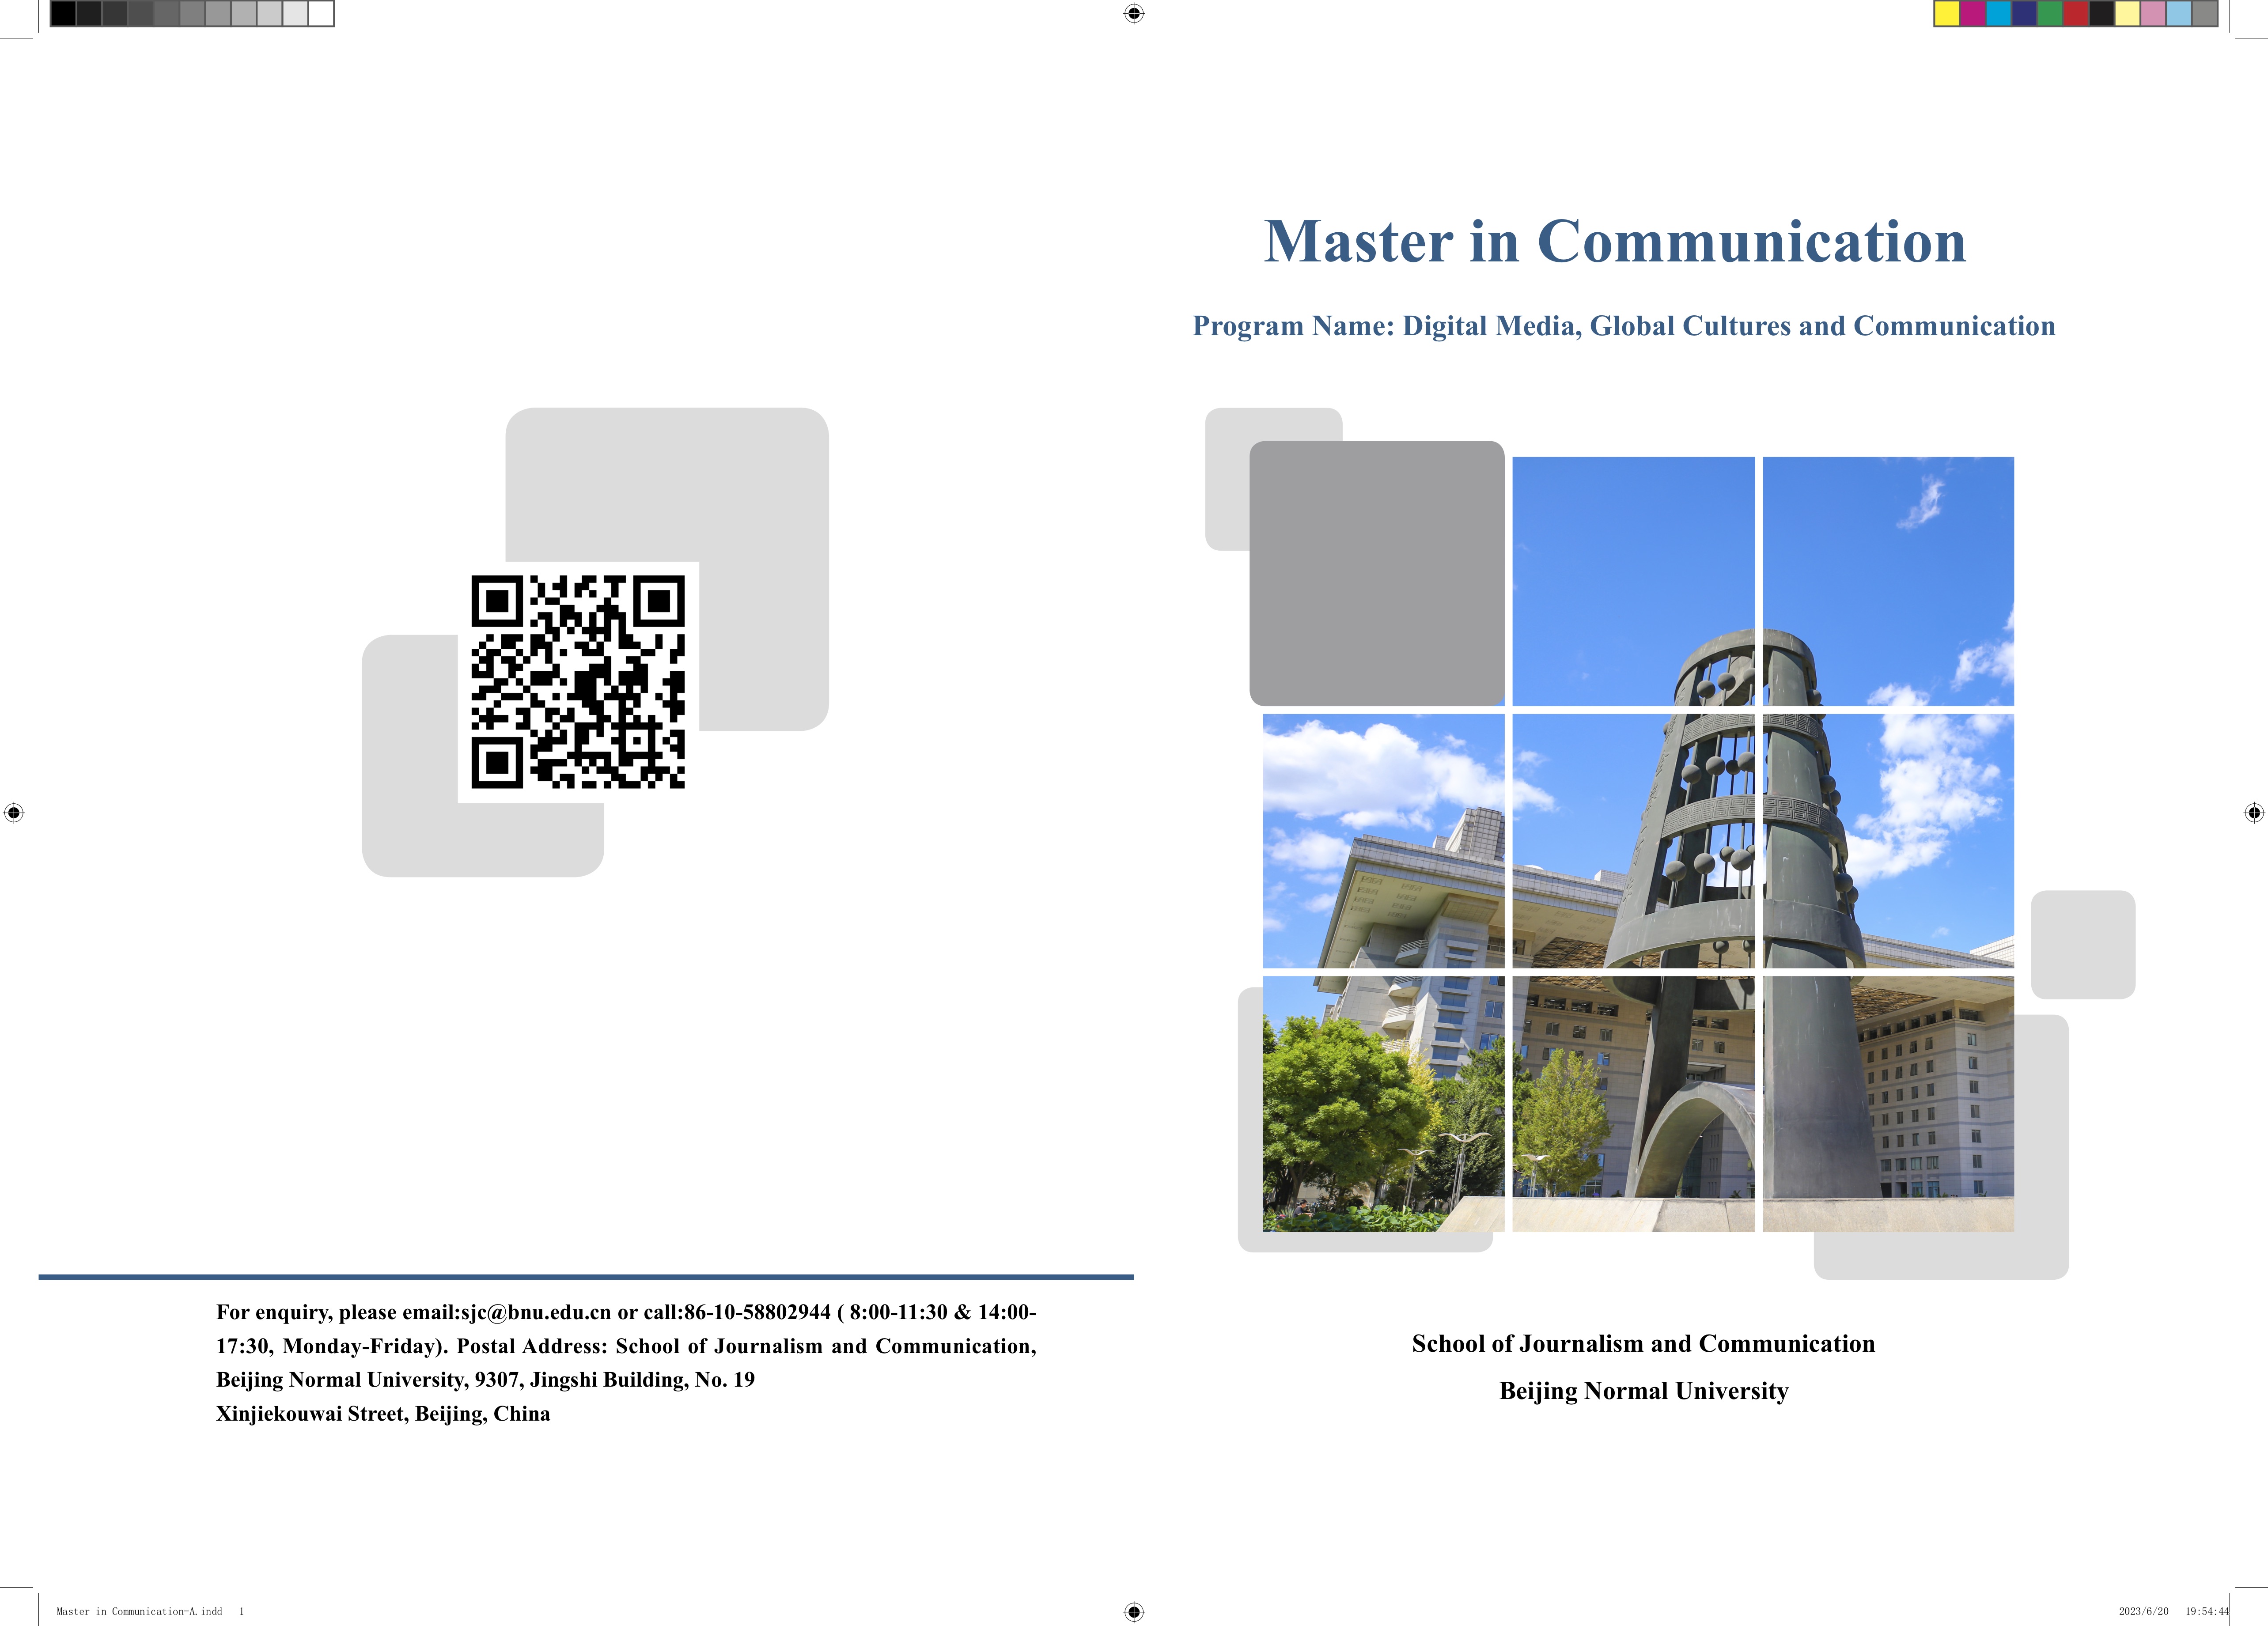 Master in Communication final.jpg